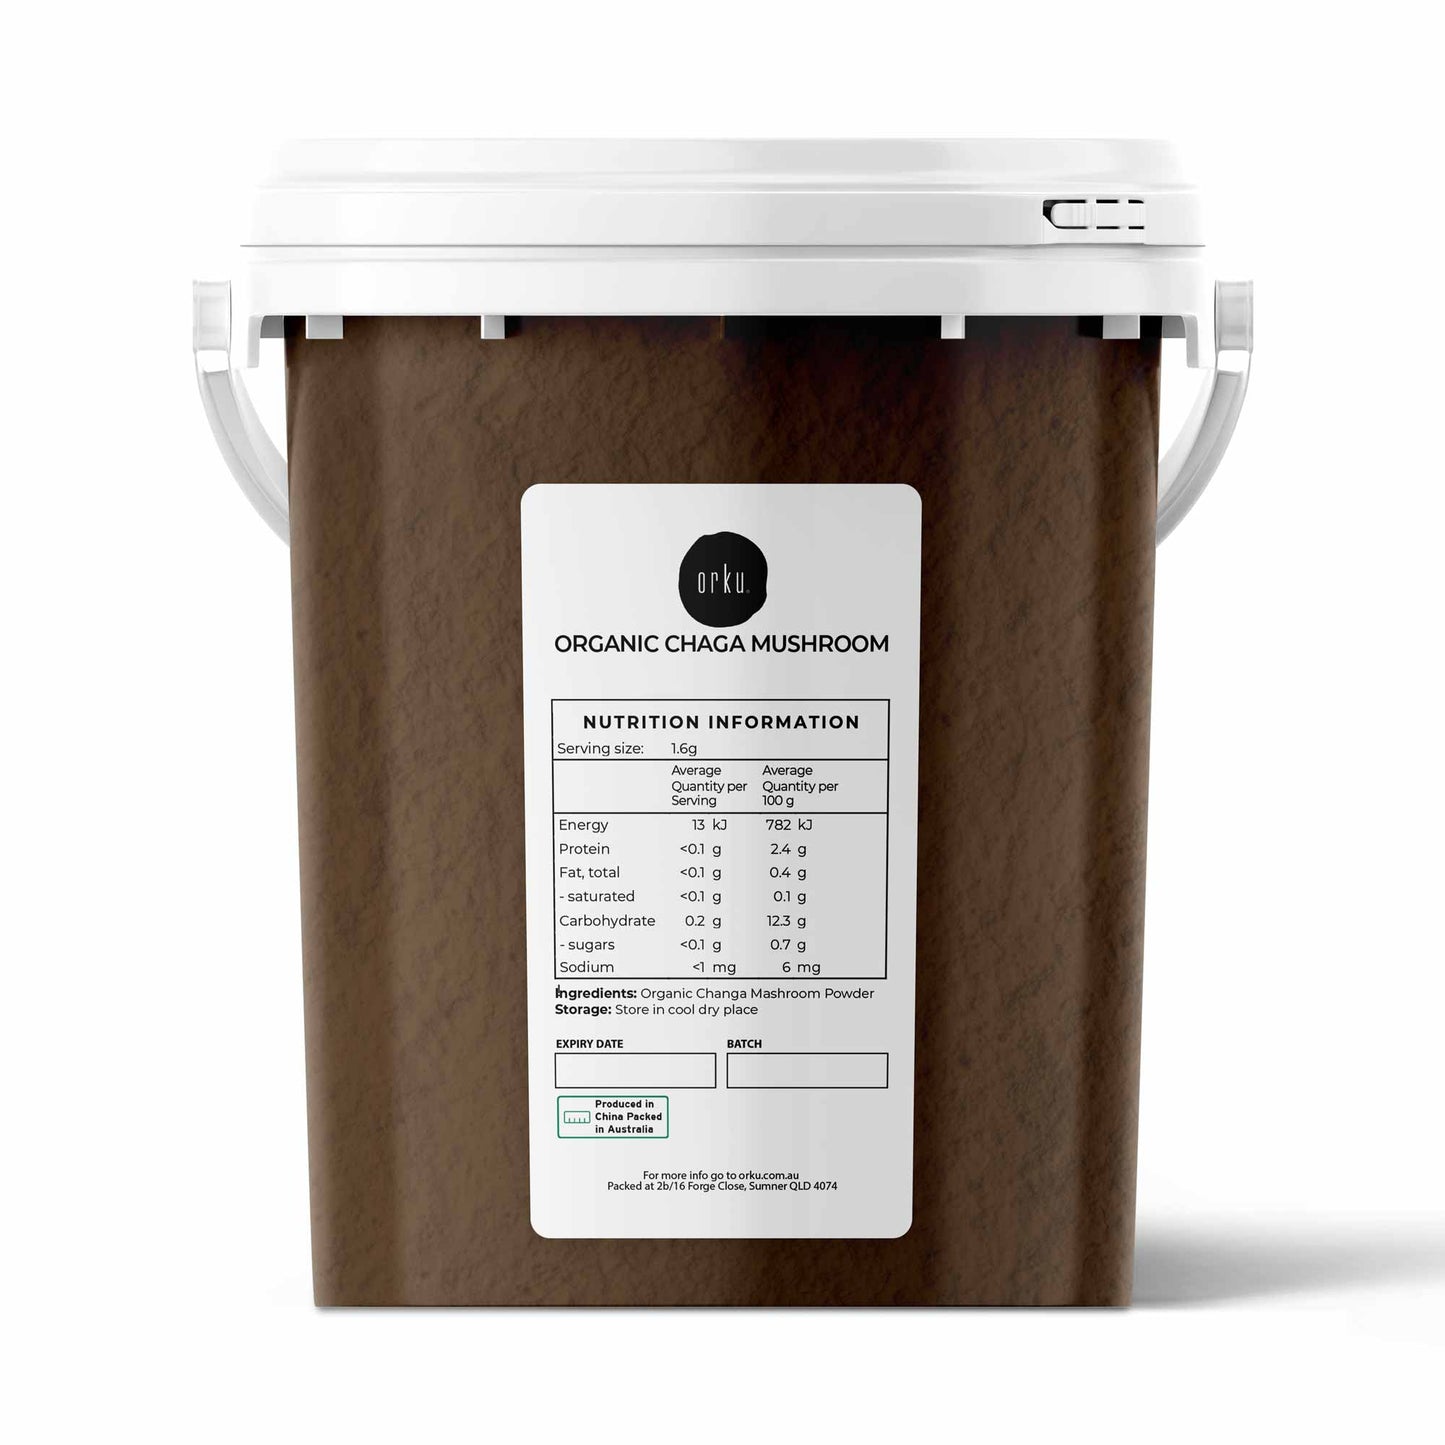 Organic Chaga Mushroom Powder Tub Bucket - Supplement Inonotus Obliquus